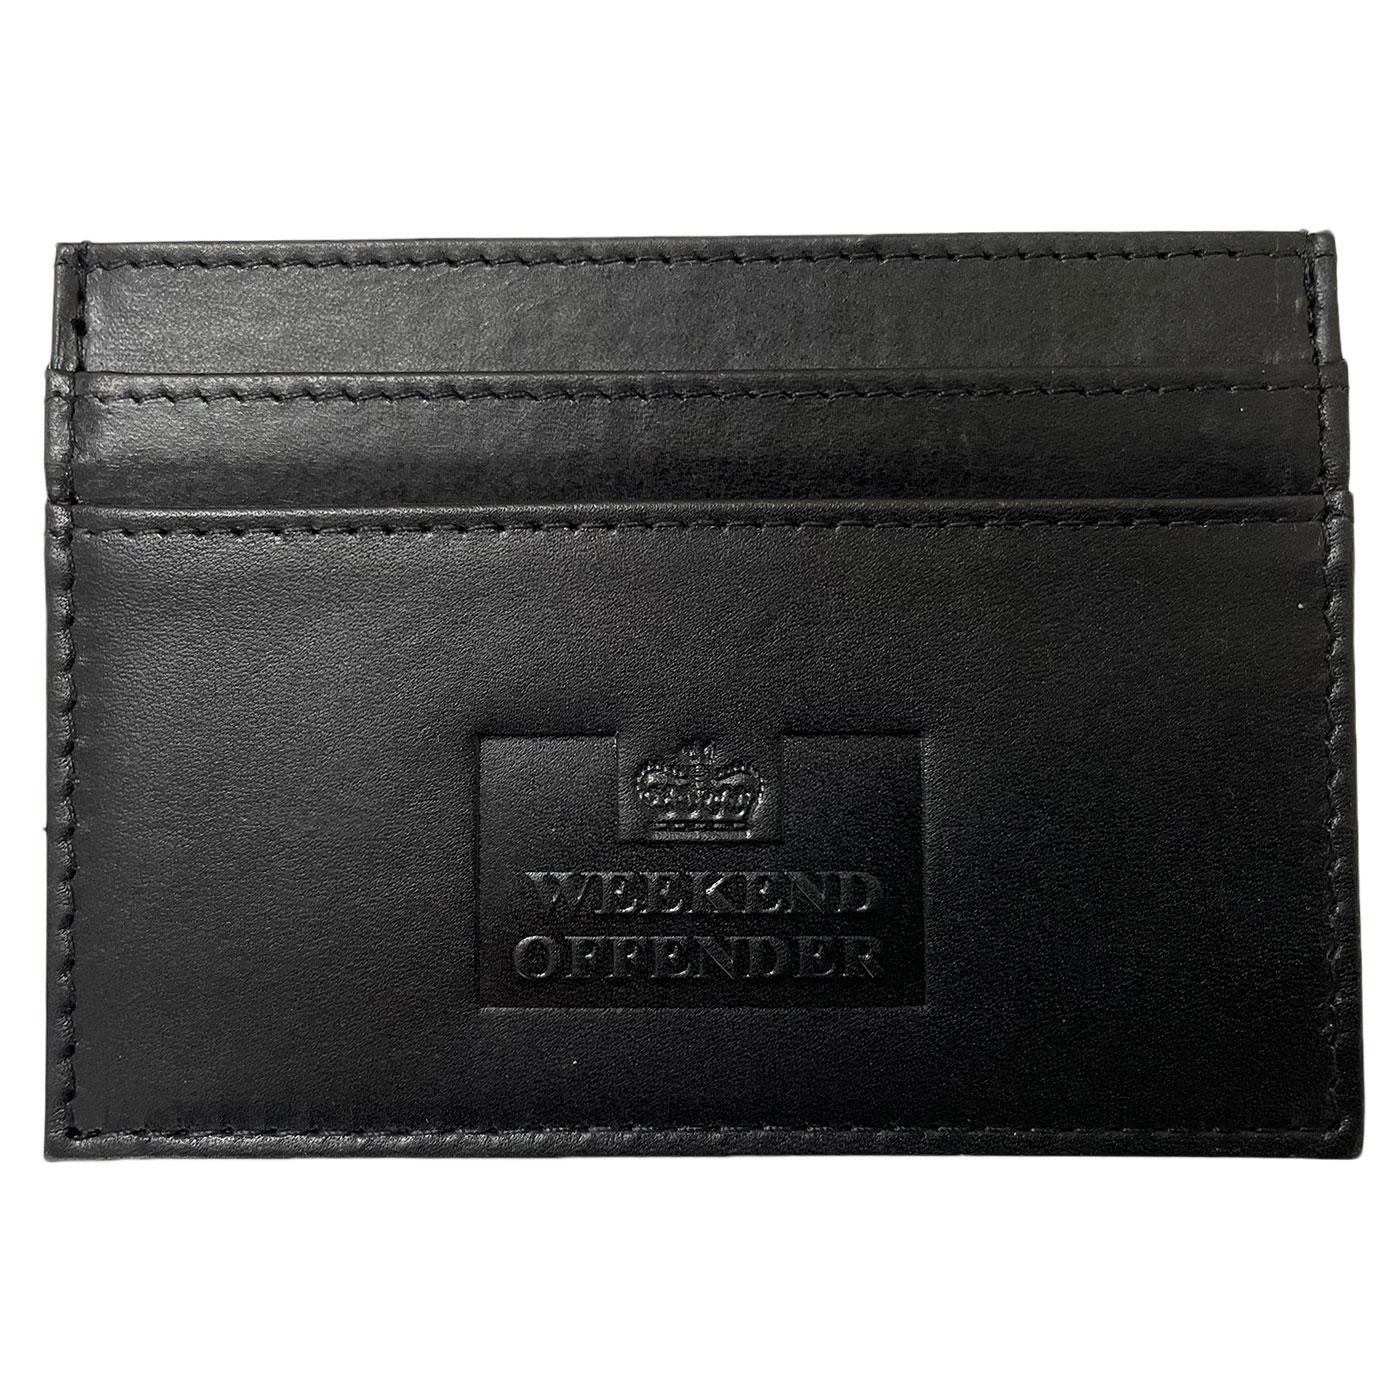 Weekend Offender Premium Leather Card Holder Black